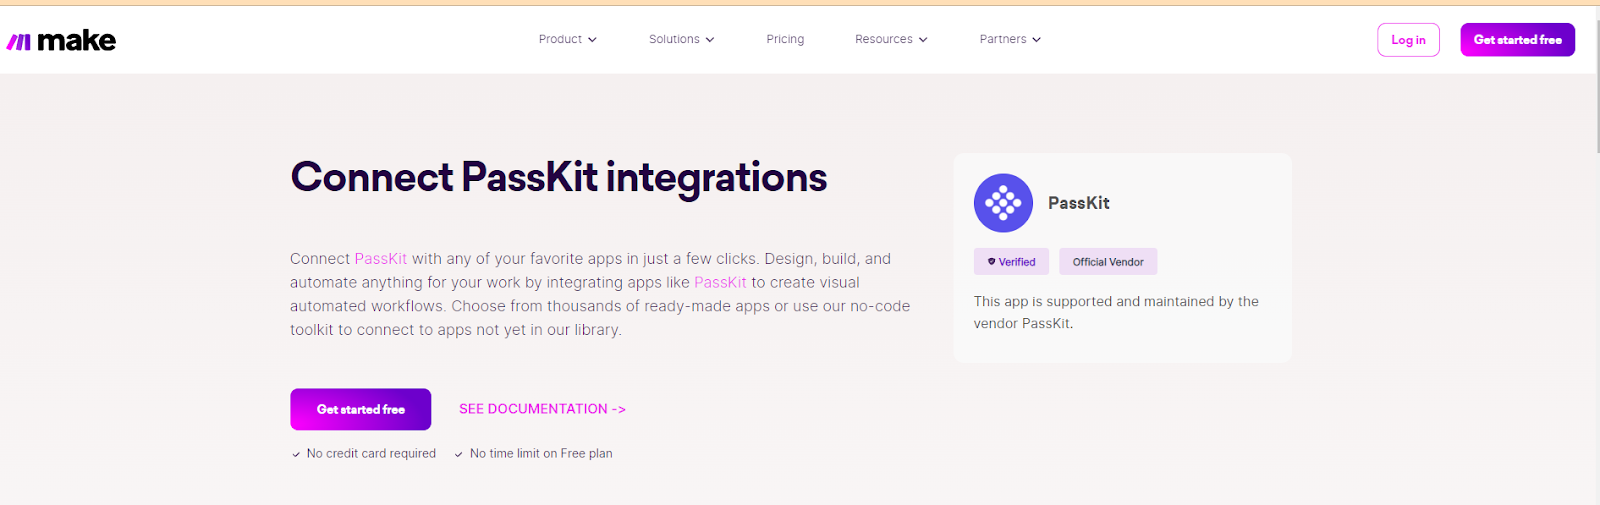 PassKit integration with Make